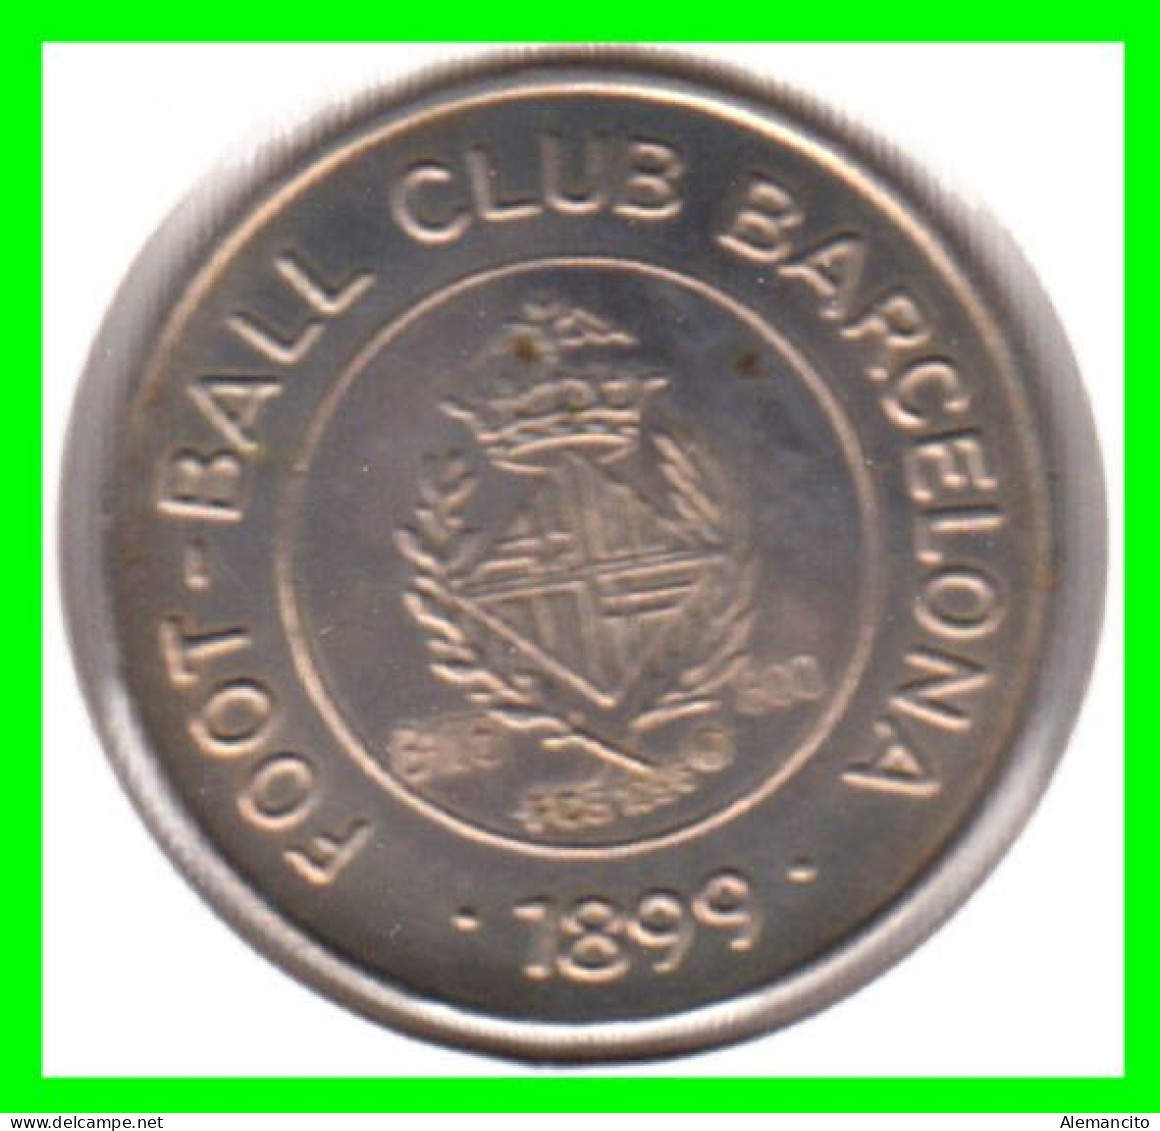 ESPAÑA  ( EUROPA ) - MEDALLA DEL 100  ANIVERSARIO DEL FUTBOL CLUB BARCELONA HANS M. GAMPER - Souvenirmunten (elongated Coins)